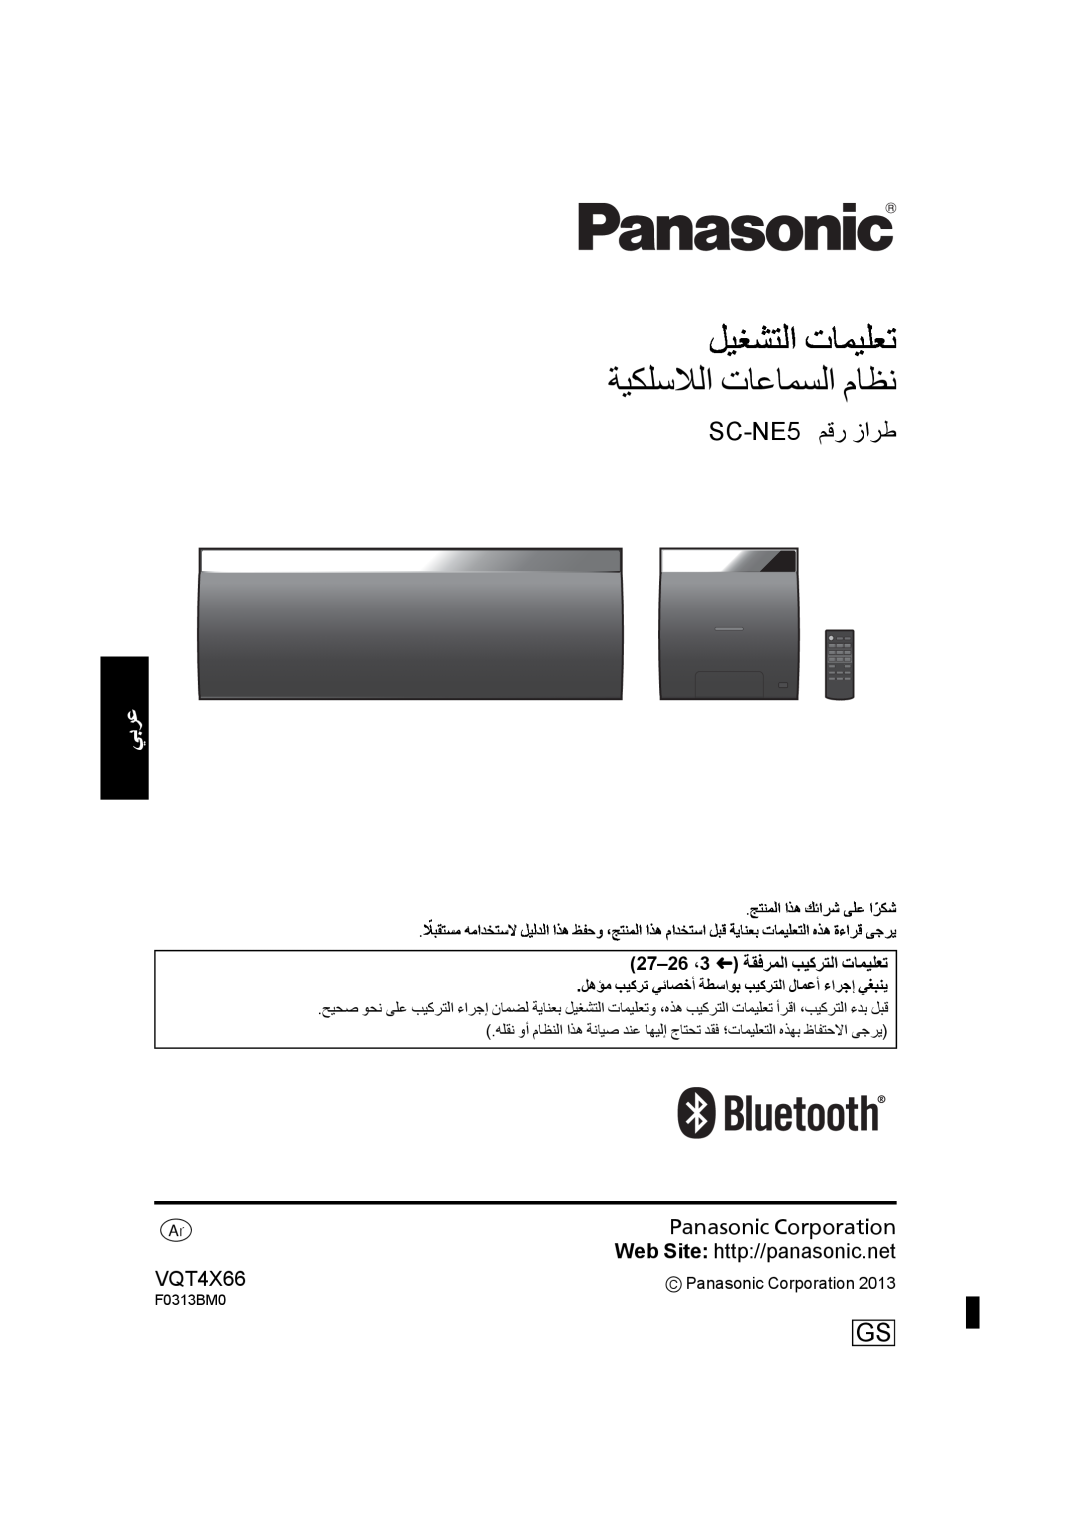 Panasonic ﻞﻴﻐﺸﺘﻟﺍ ﺕﺎﻤﻴﻠﻌﺗ ﺔﻴﻜﻠﺳﻼﻟﺍ ﺕﺎﻋﺎﻤﺴﻟﺍ ﻡﺎﻈﻧ, SC-NE5ﻢﻗﺭ ﺯﺍﺮﻃ, ﻲﺑﺮﻋarabic, 27–26،3 R ﺔﻘﻓﺮﻤﻟﺍ ﺐﻴﻛﺮﺘﻟﺍ ﺕﺎﻤﻴﻠﻌﺗ 